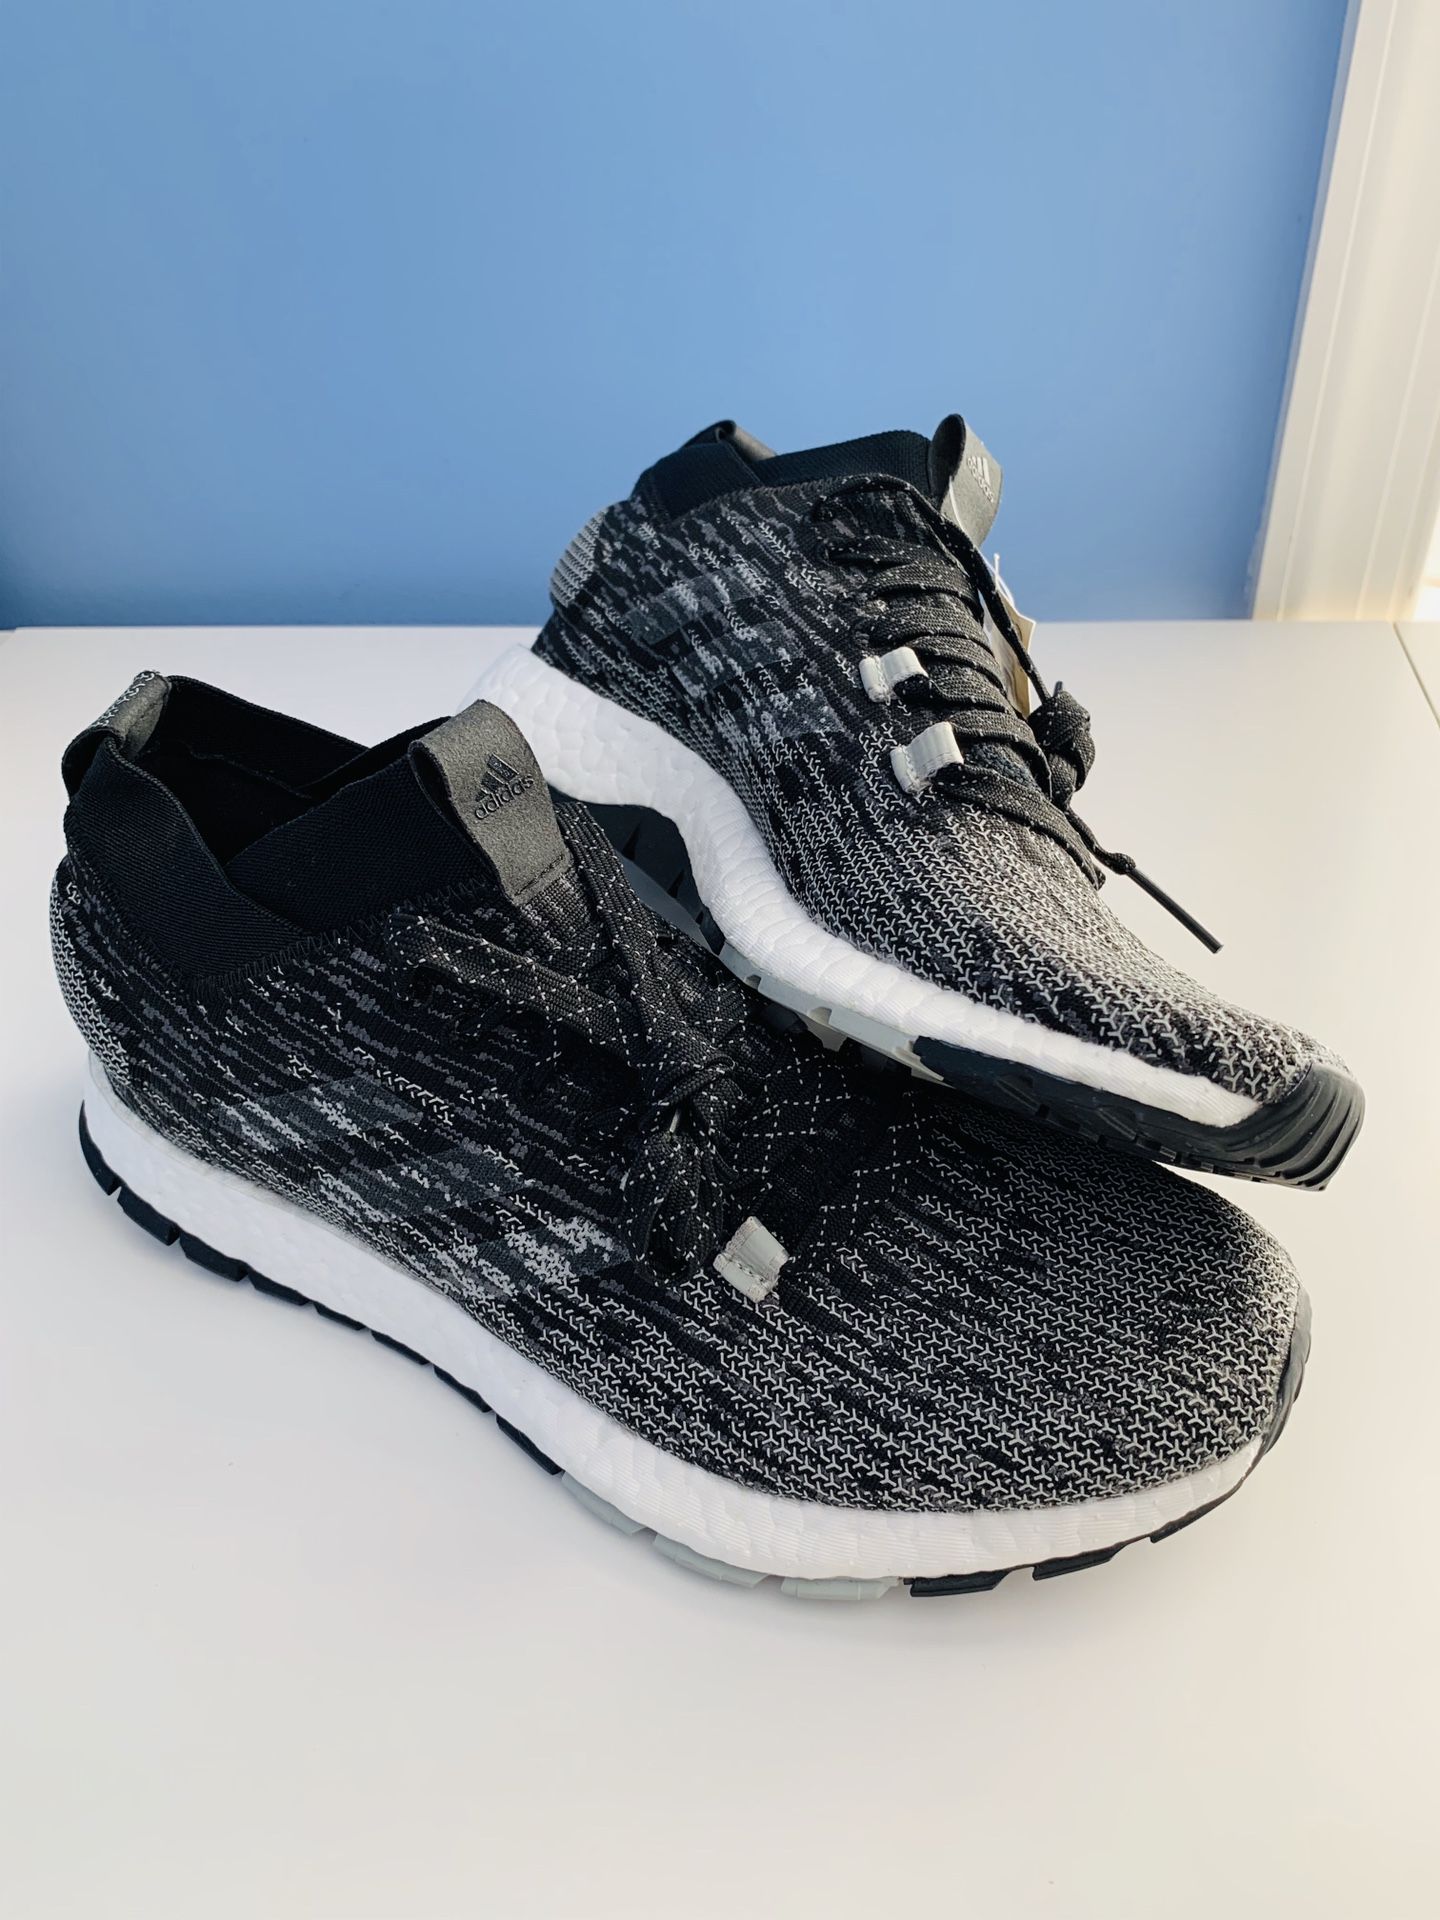 adidas UltraBoost Women’s Running Shoes, Size 7.5